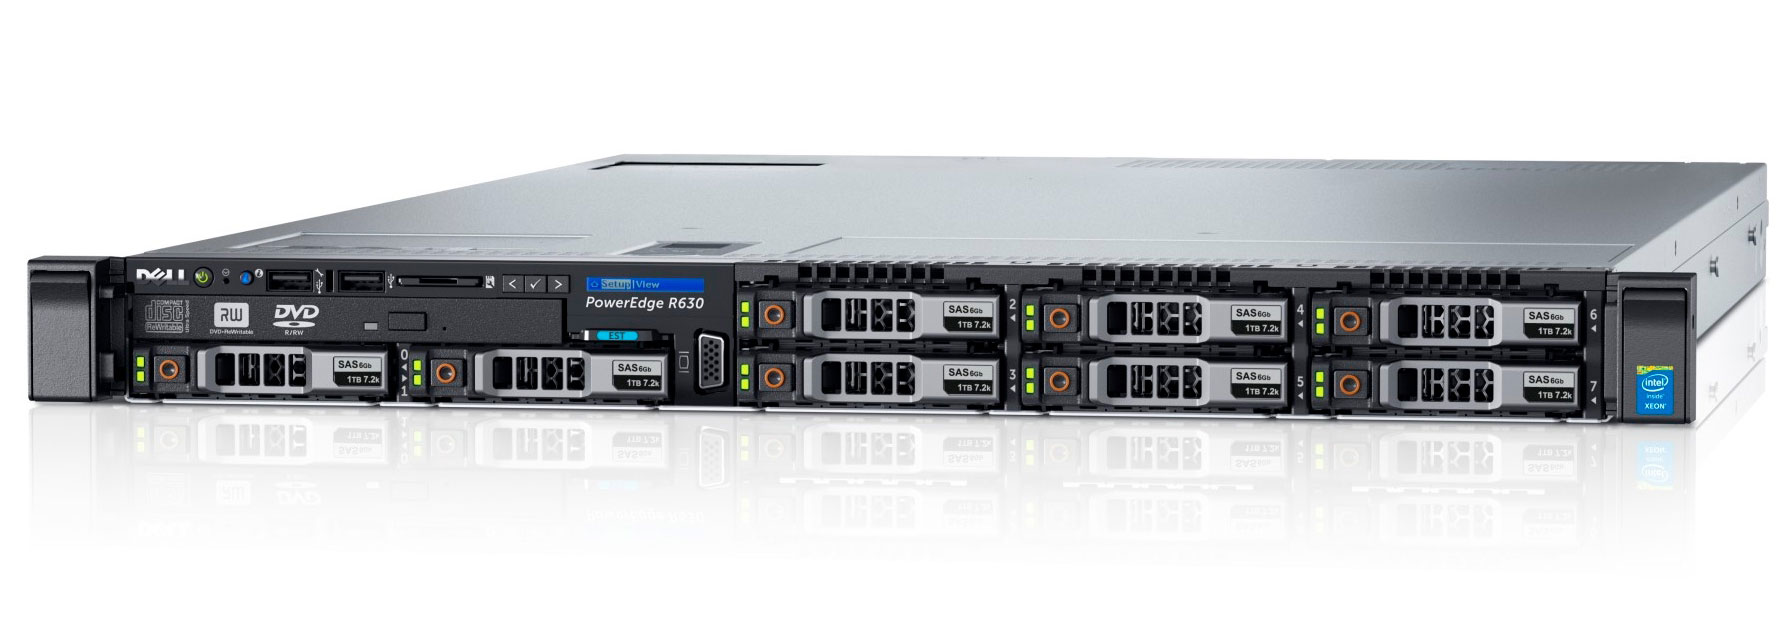 Подробное фото Сервер DELL PowerEdge R630 Xeon 2x E5-2667v4 192Gb DDR4 2133P 8x noHDD 2.5", SAS RAID Perc H730 mini, 1024Mb, DVD, 2*PSU